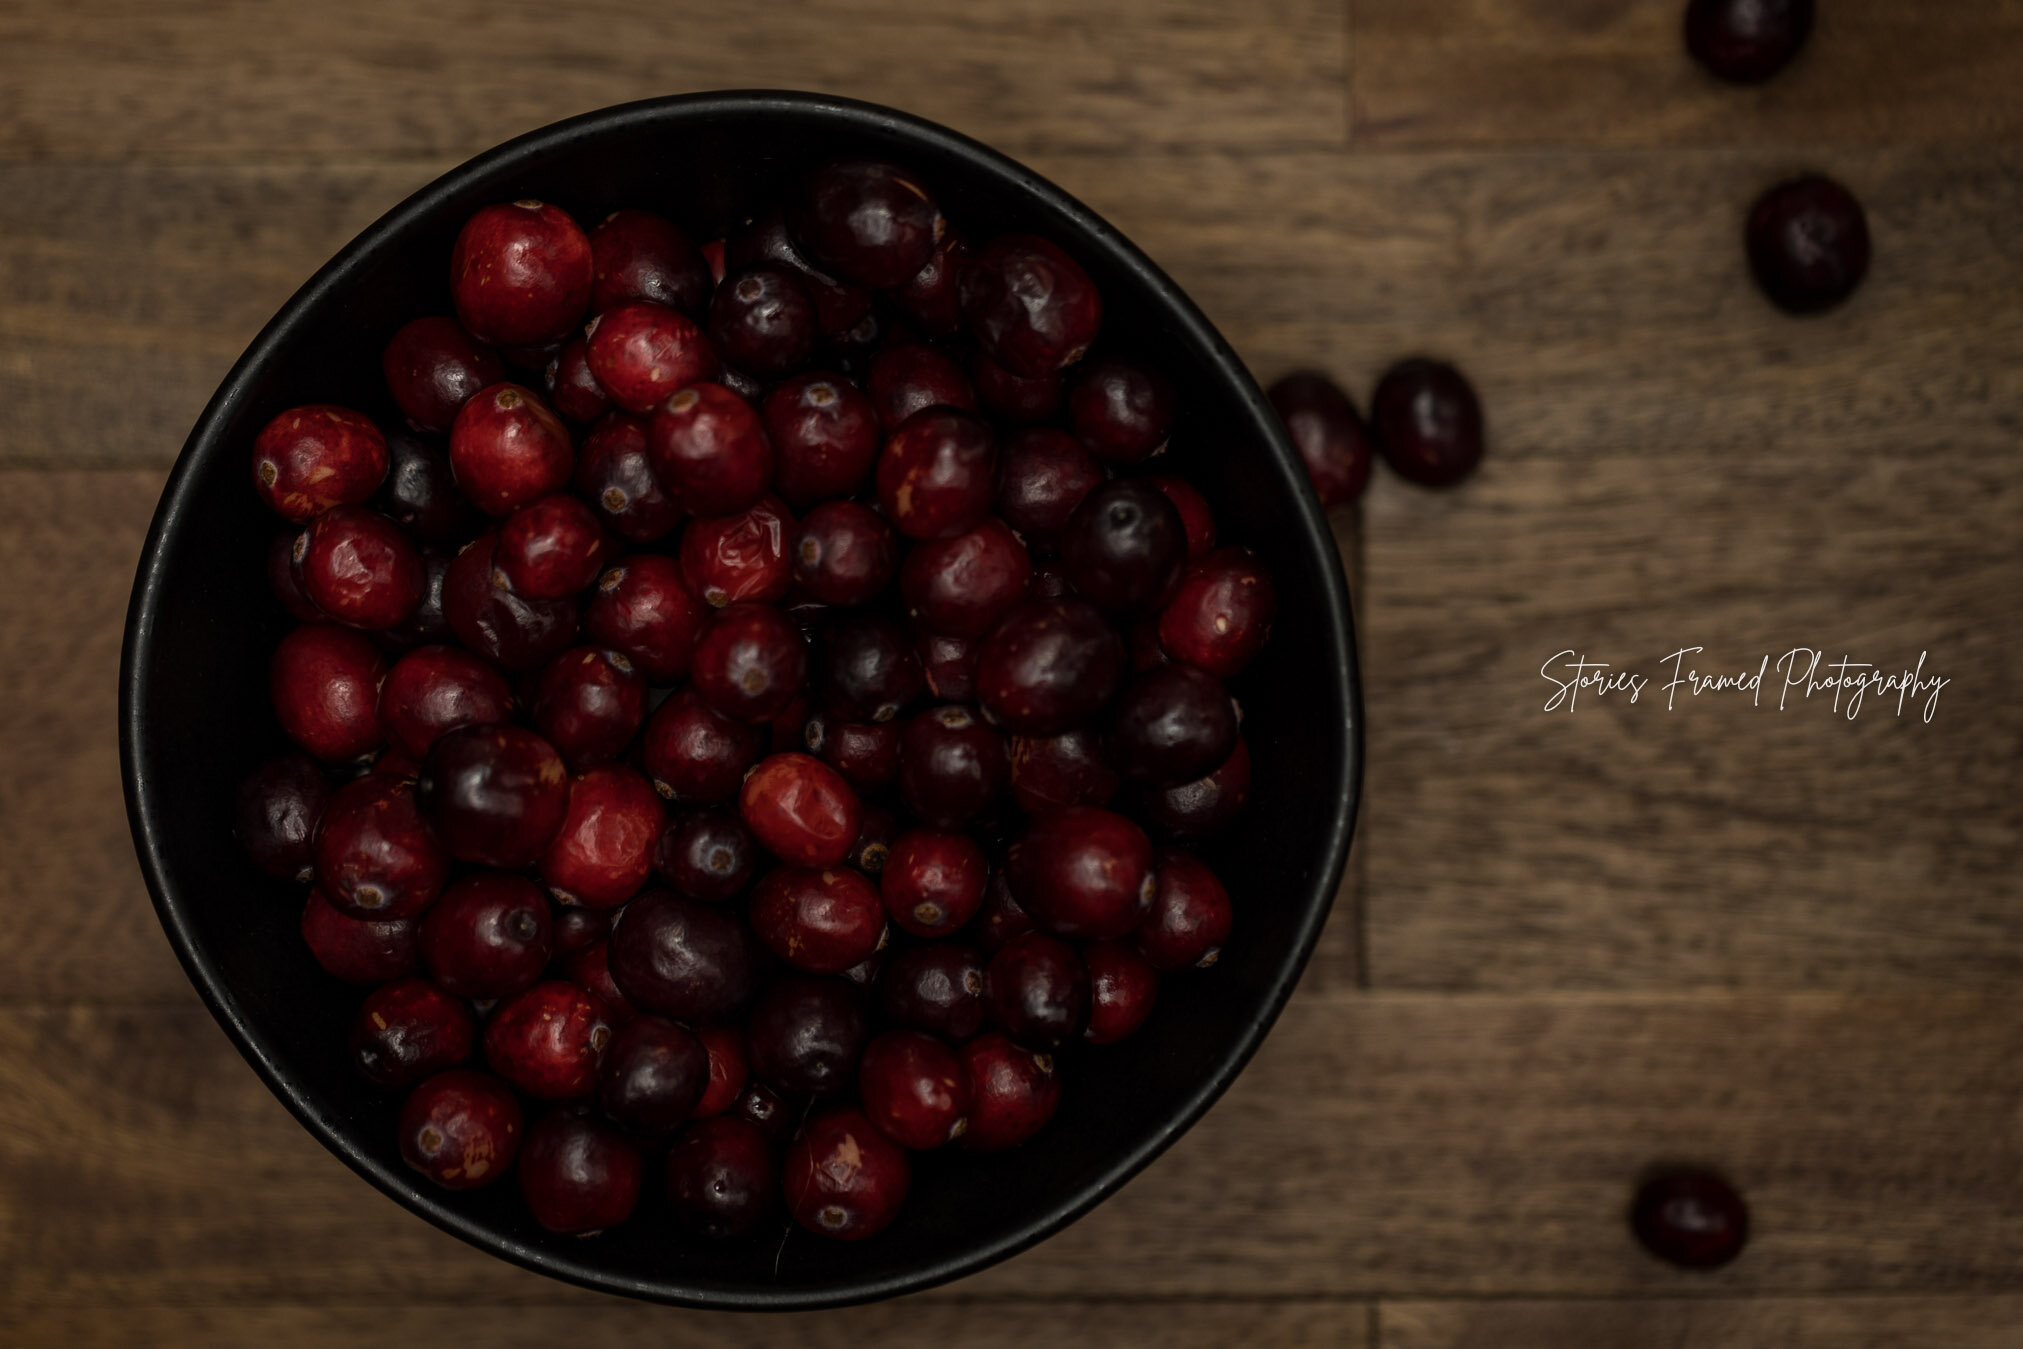 05-31-days-of-joy-red-cranberries.jpg